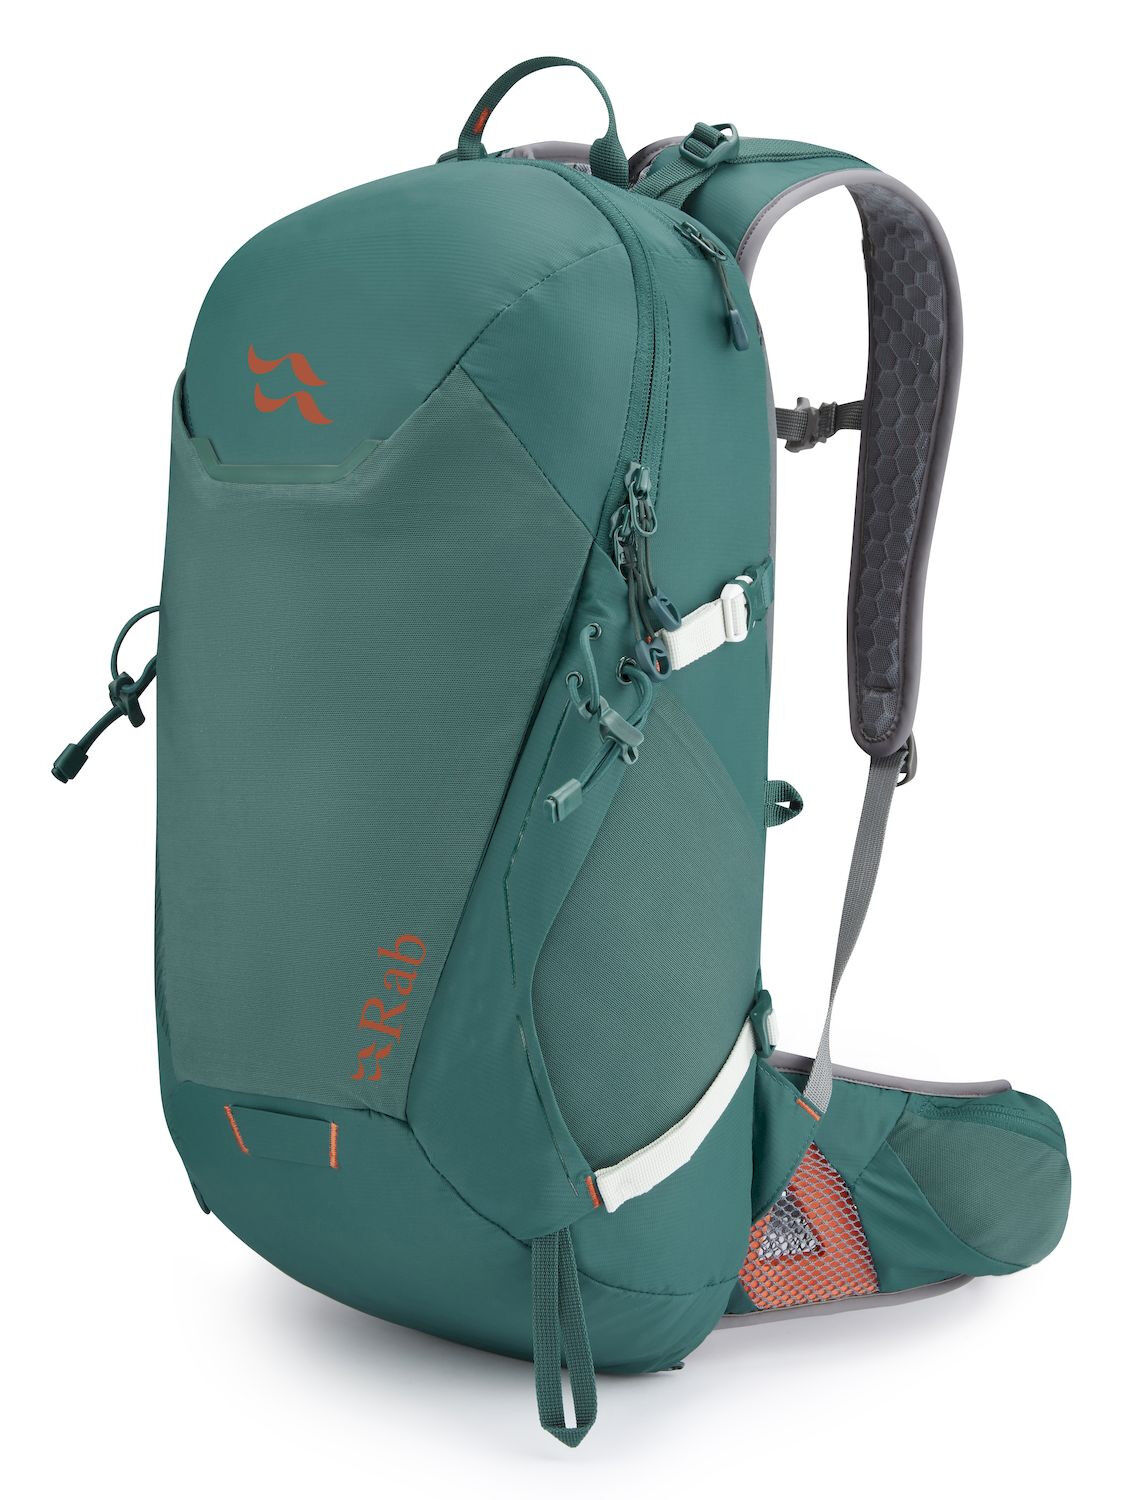 Rab Aeon 20 - Walking backpack - Men's